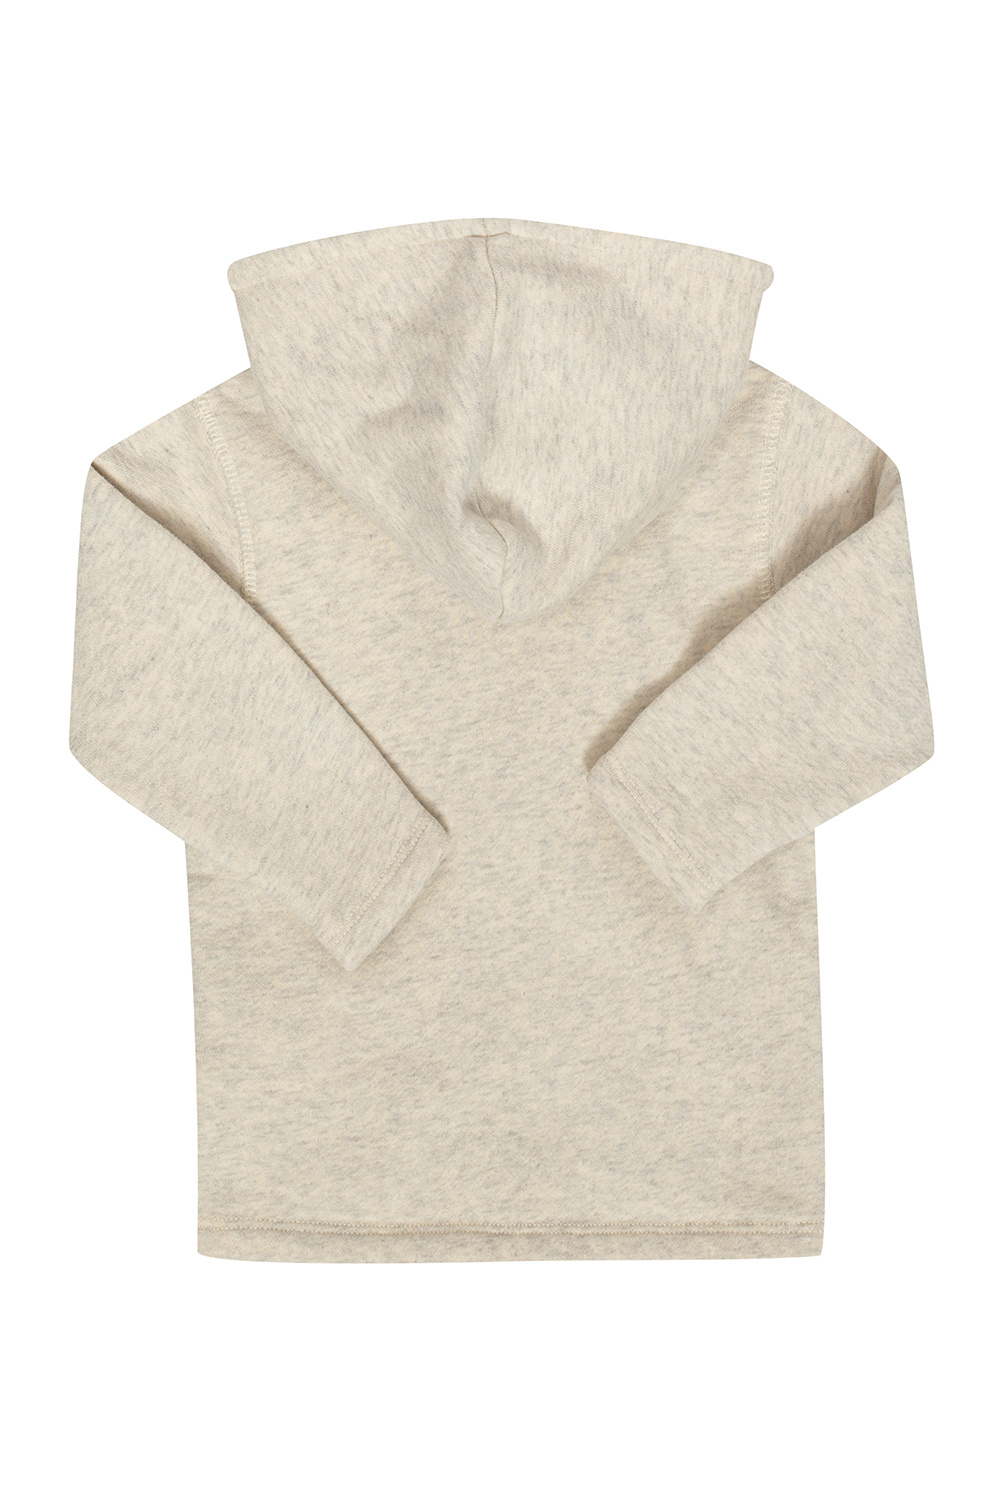 Bonpoint  hoodie neck with logo